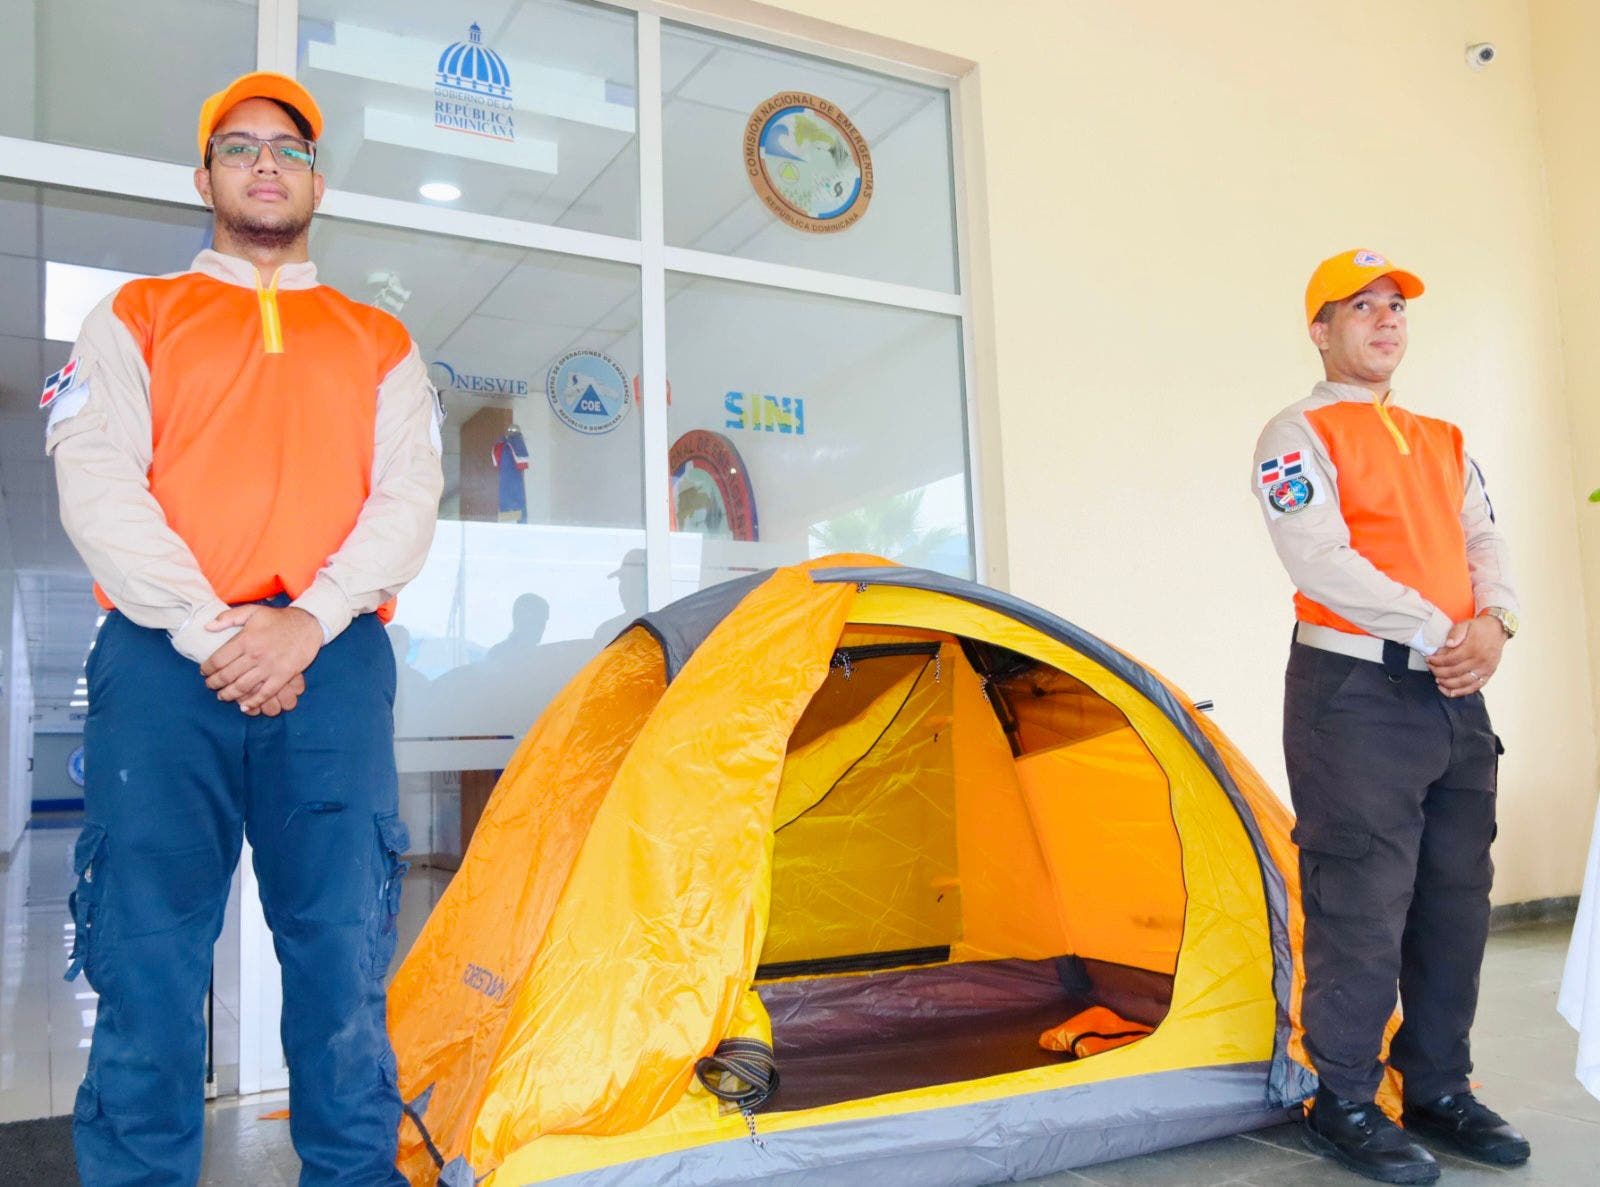 Plan Social dona casas de campaña y sleeping bags a Defensa Civil para reforzar labores operativas